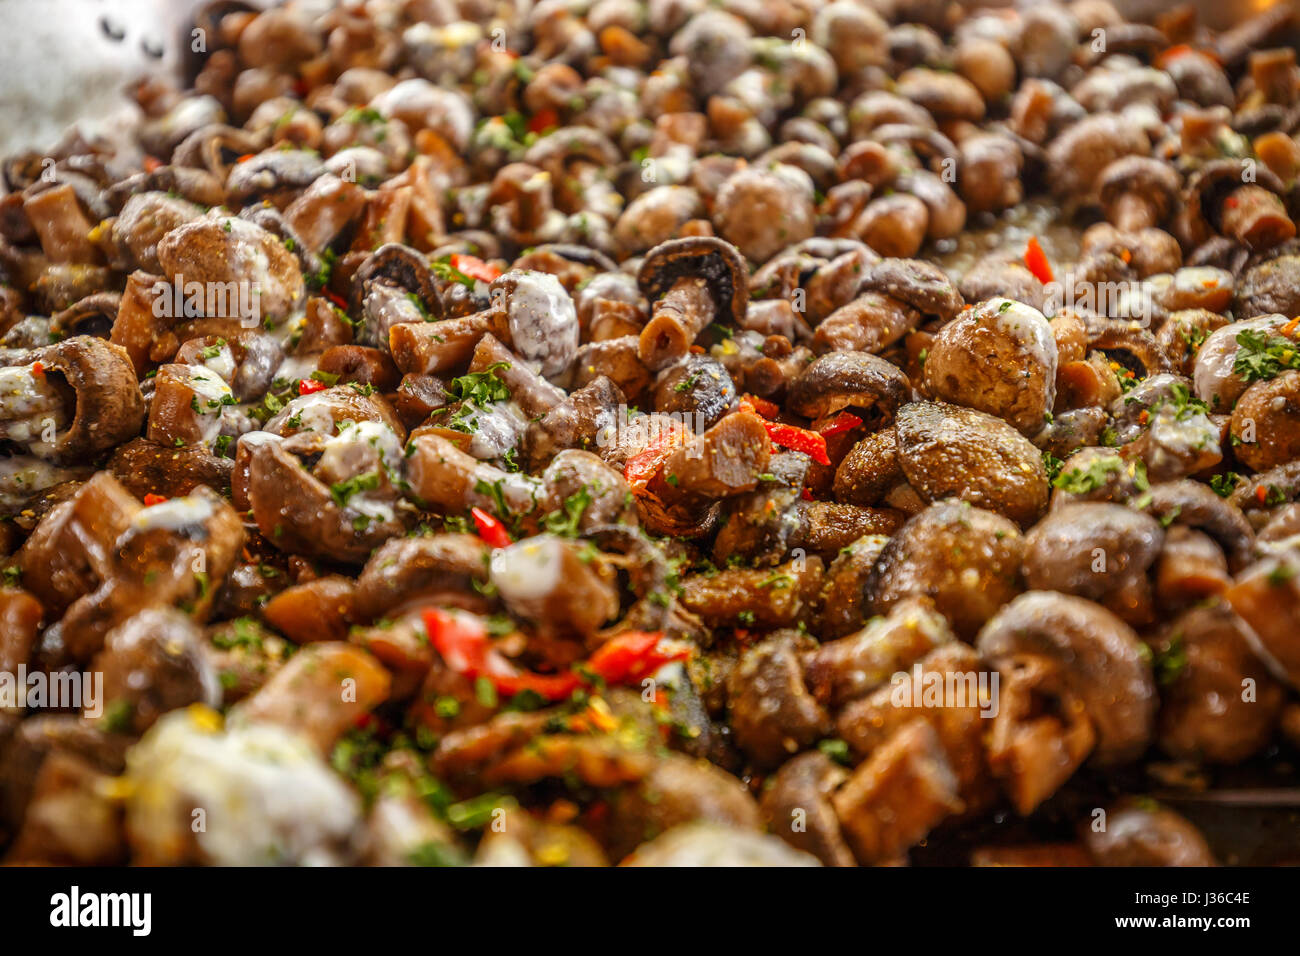 Champignon mushrooms cooked in big metal wok Stock Photo